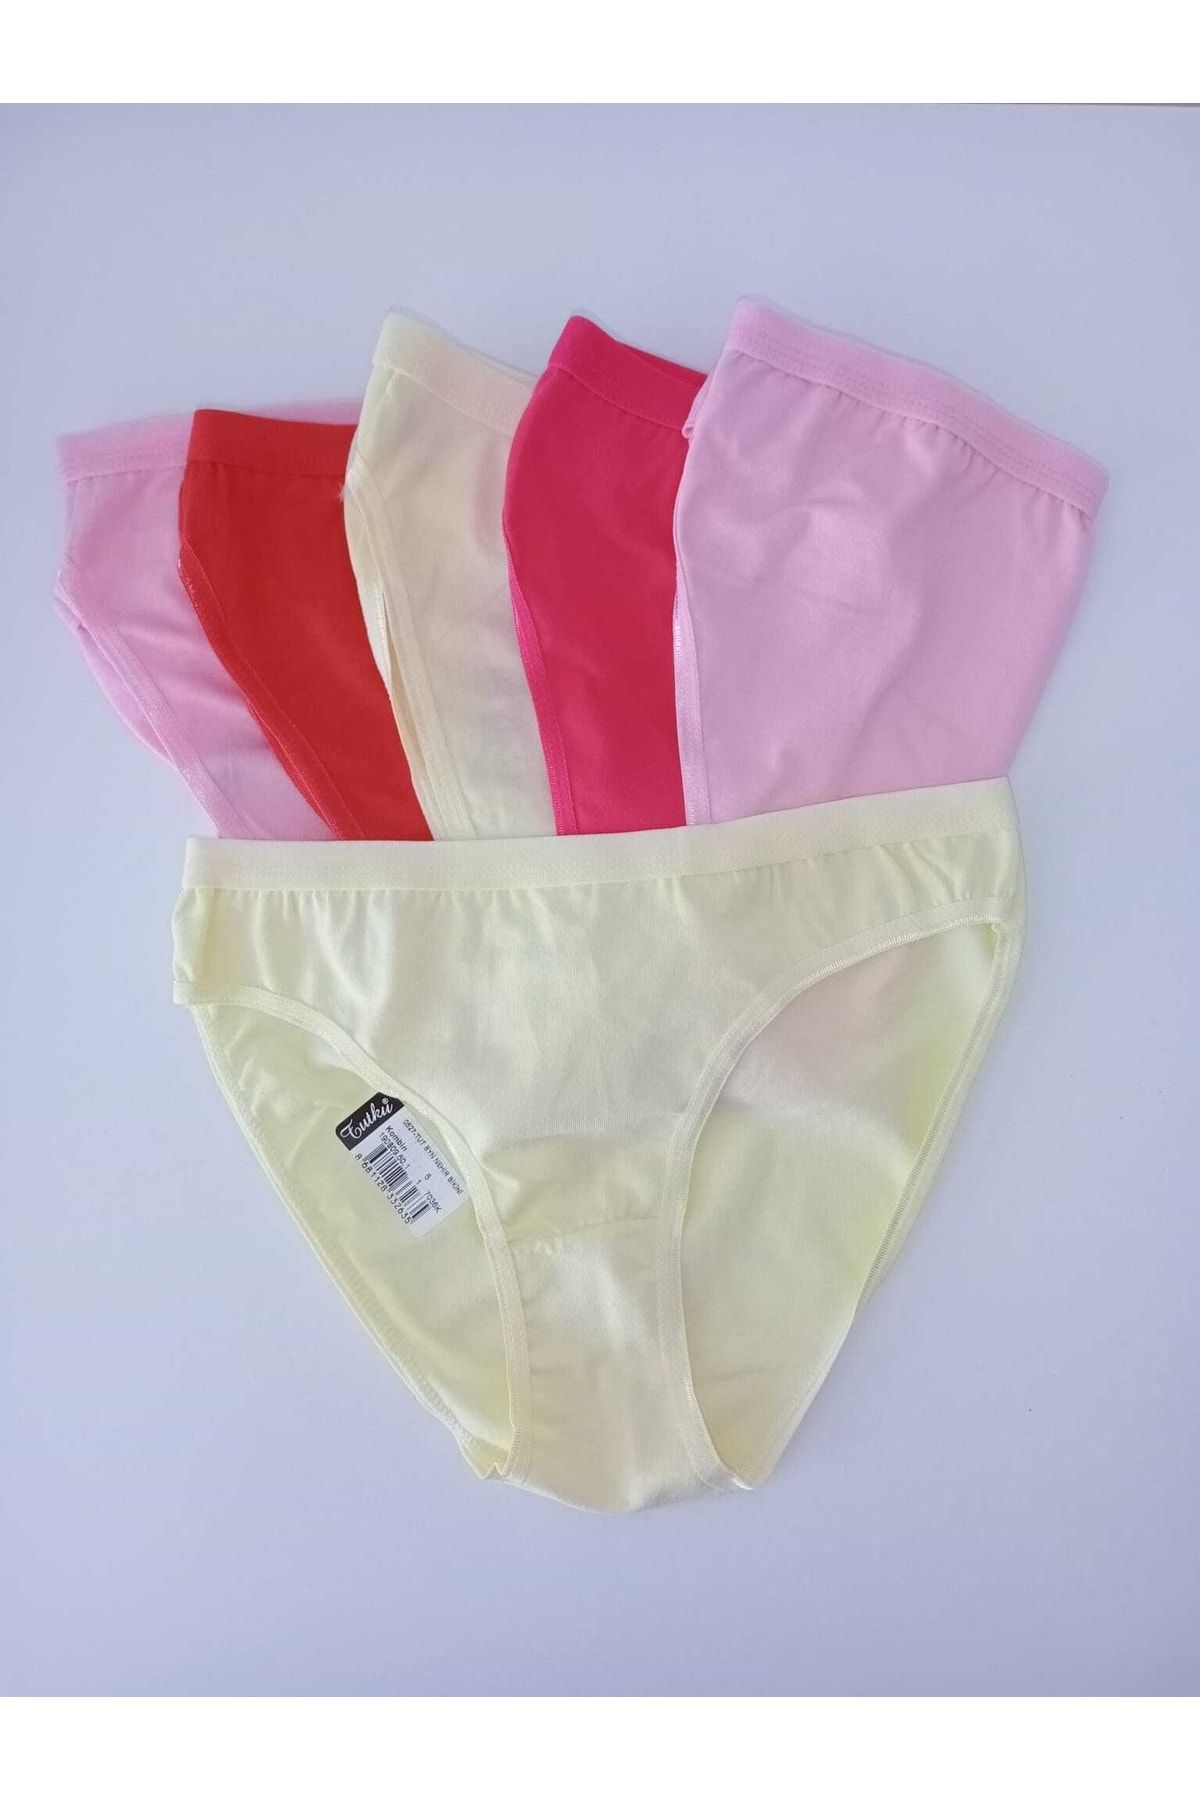 Tutku Nehir Bikini Külot 6 Lı Paket